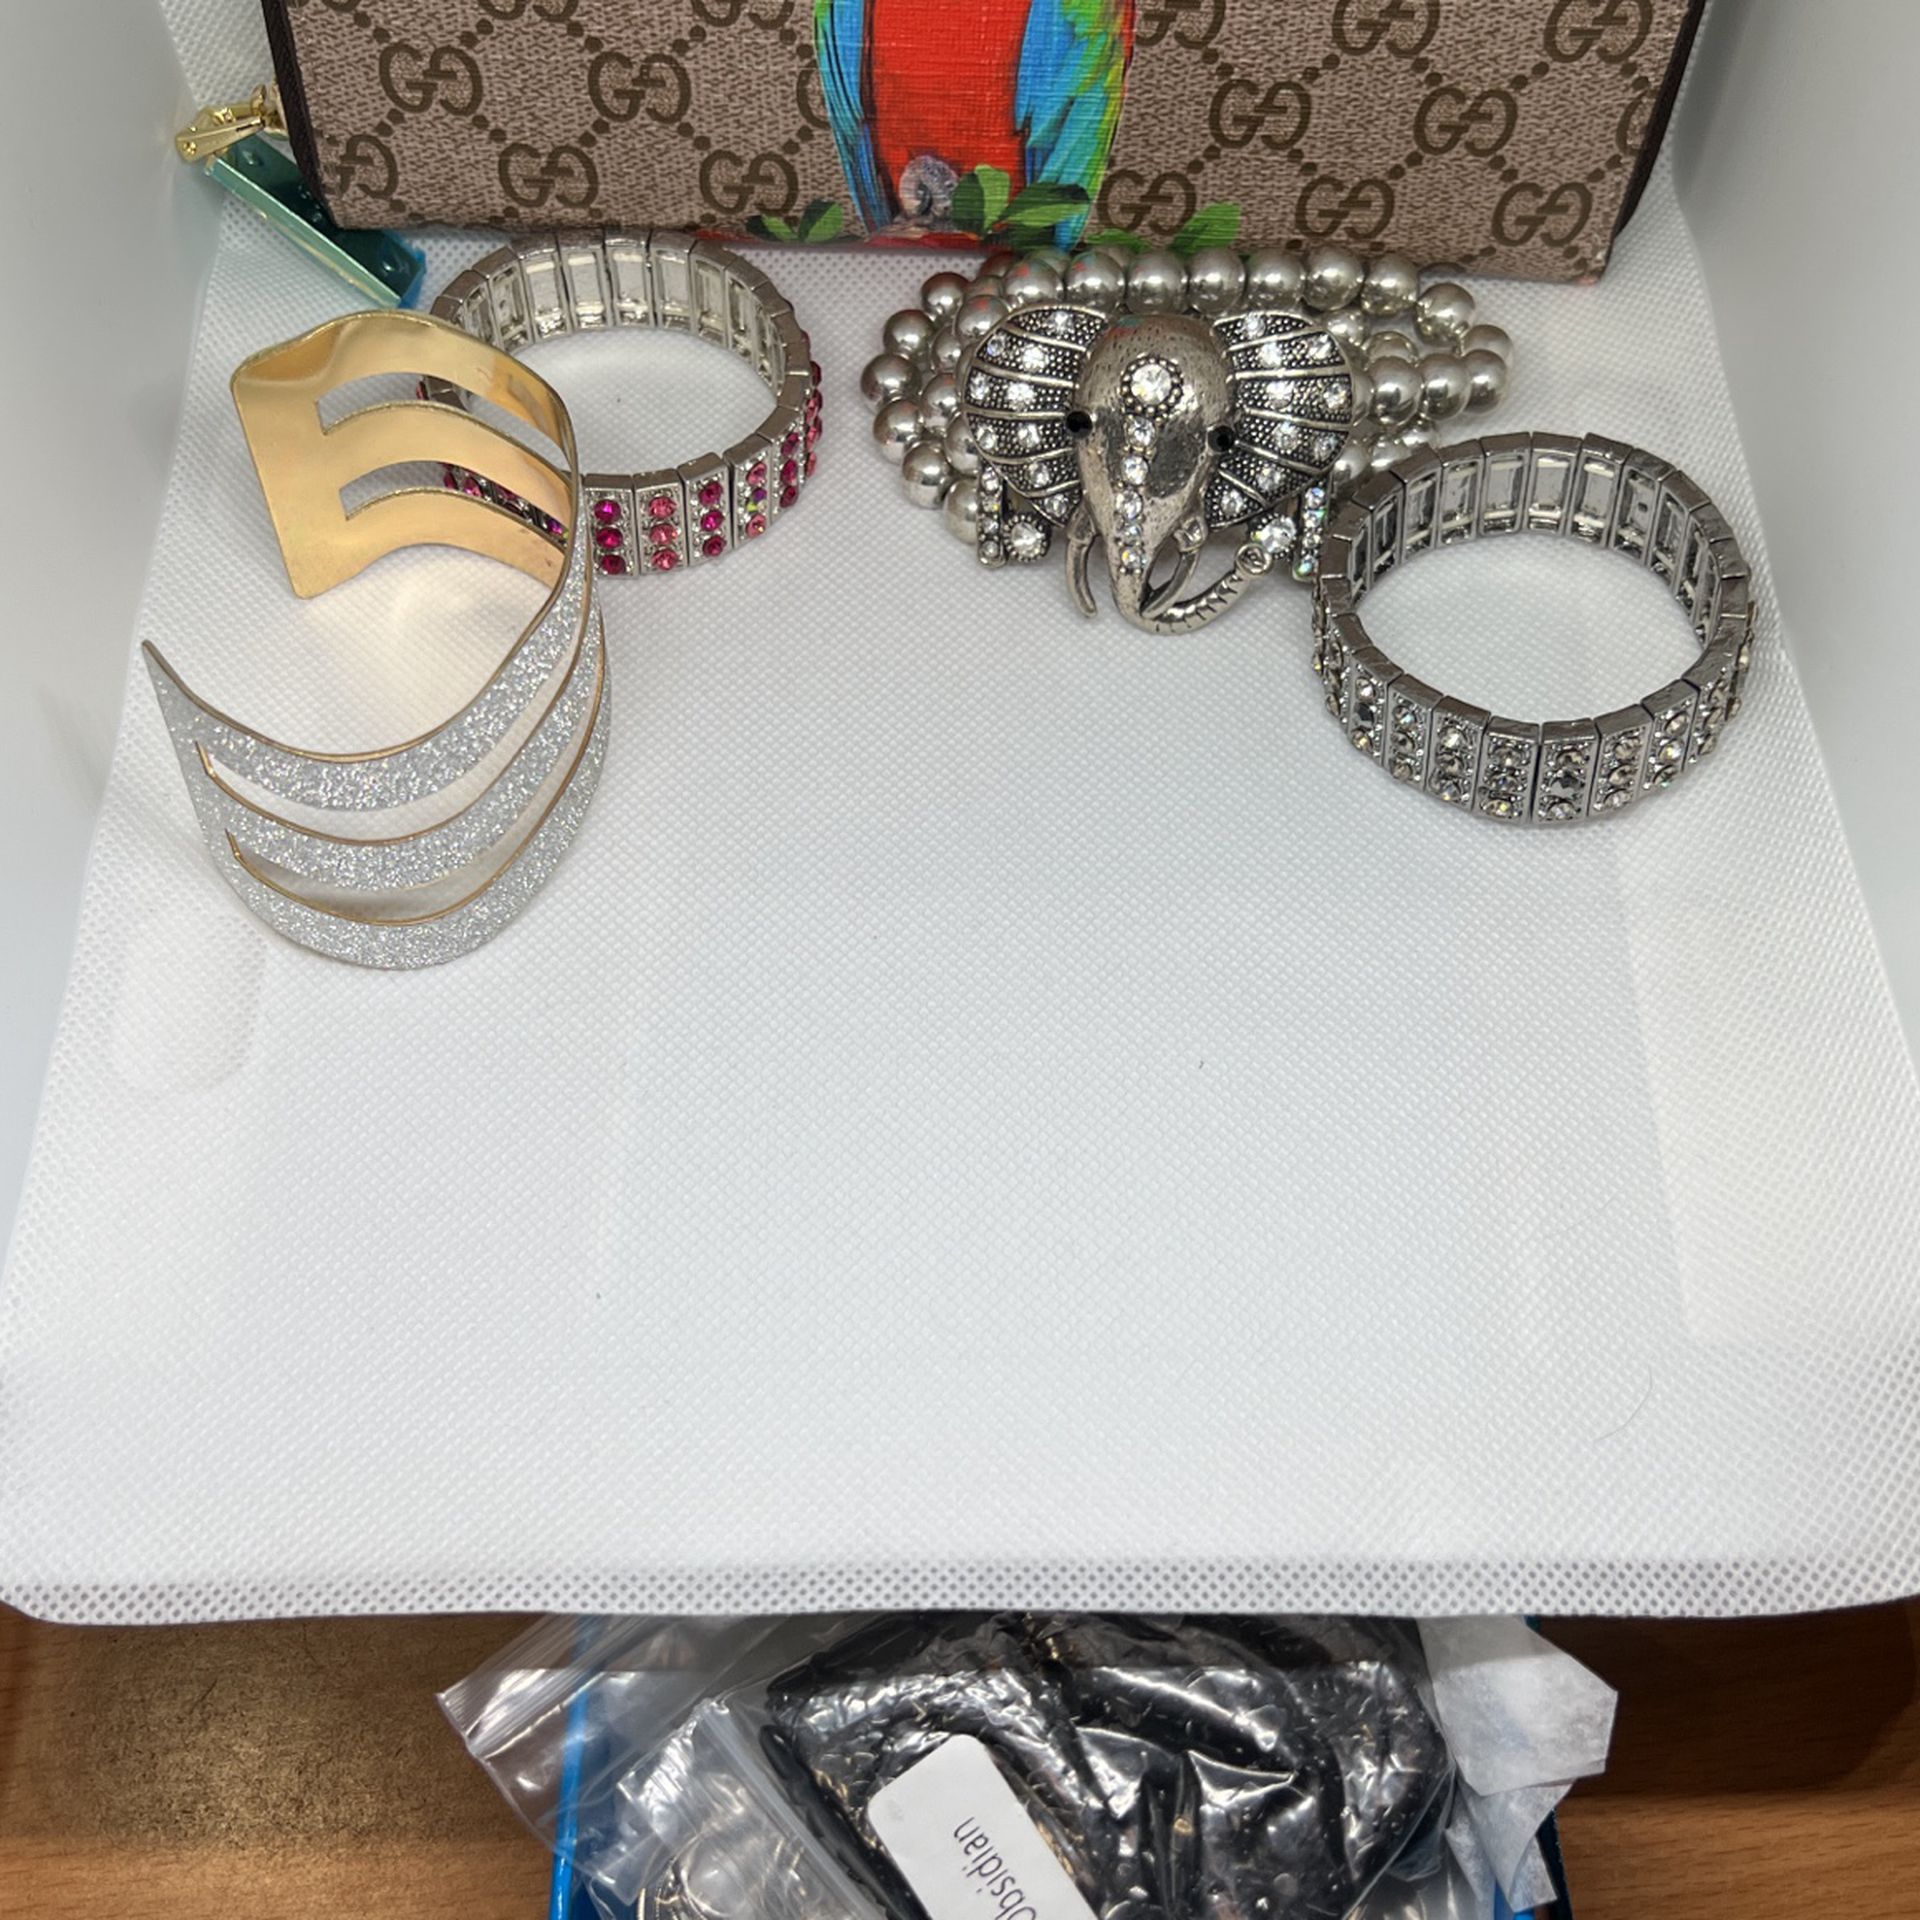 4 Bracelets And Fashion Wallet   